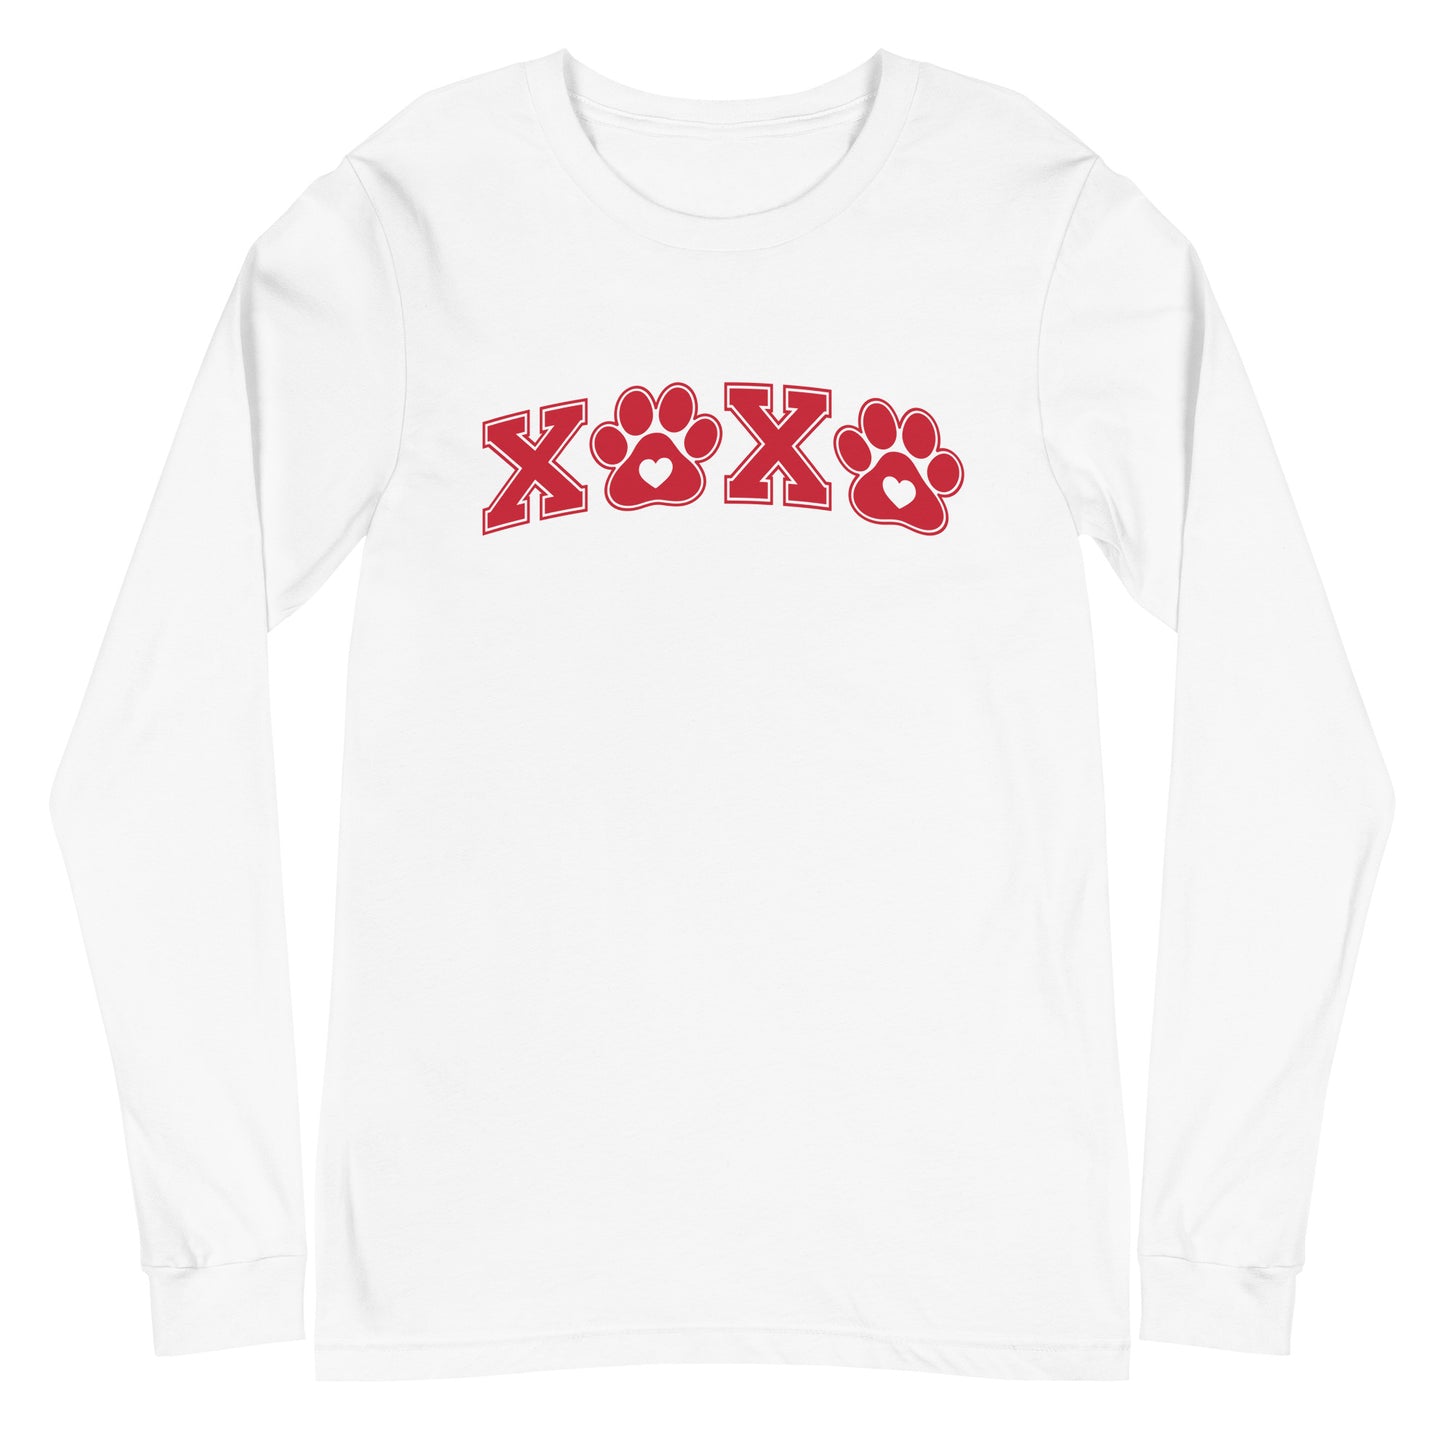 XOXO Paw Print Valentine's Day Long Sleeve Tee